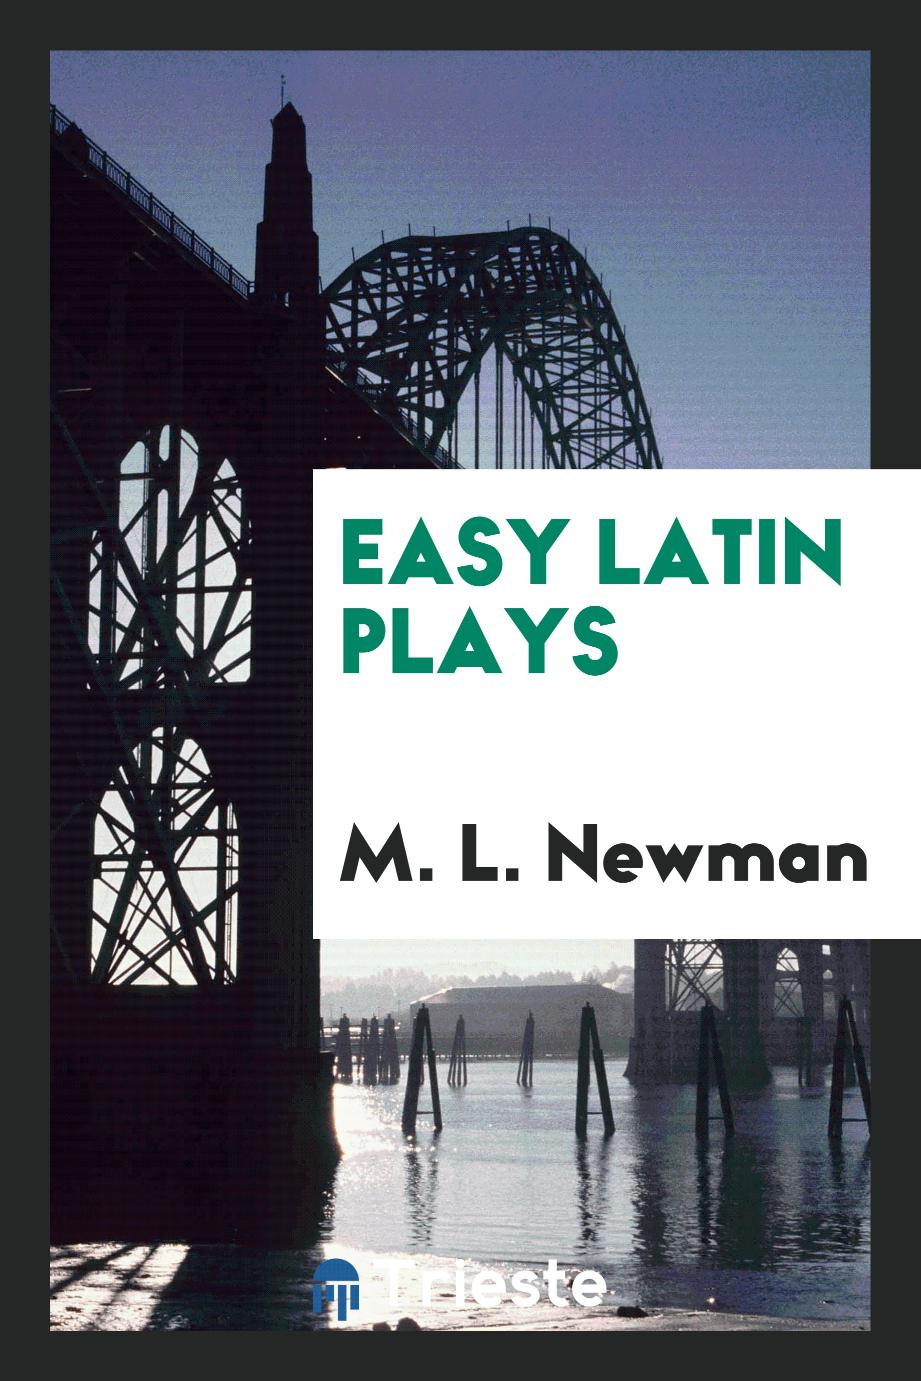 Easy Latin plays